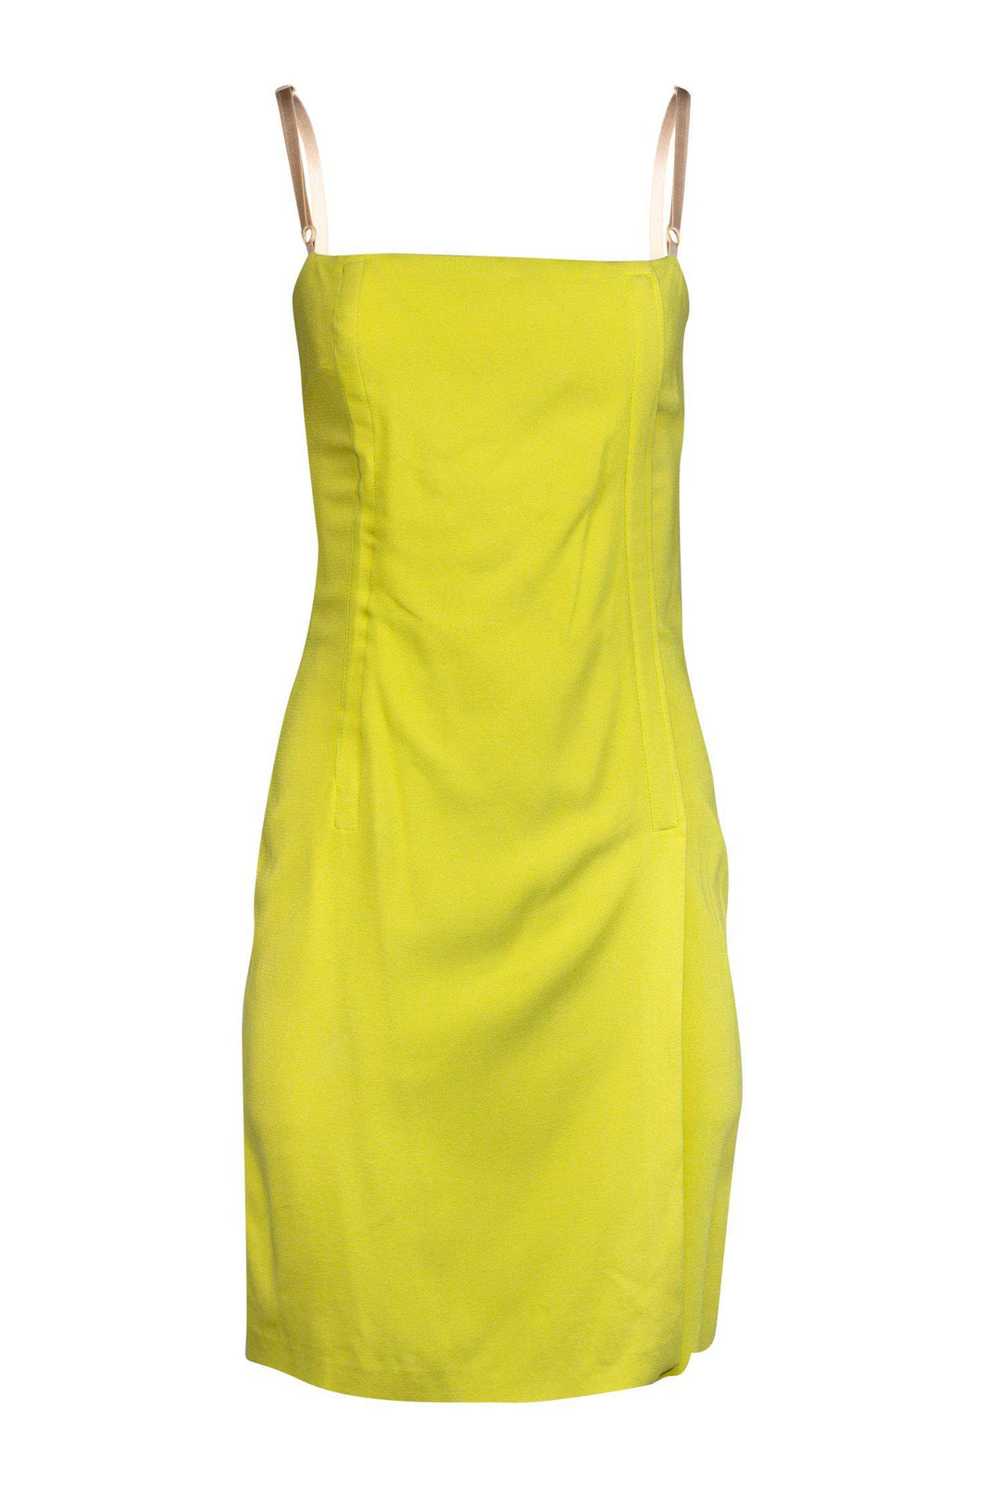 Dolce & Gabbana - Bright Yellow Bodycon Dress Sz 2 - image 1